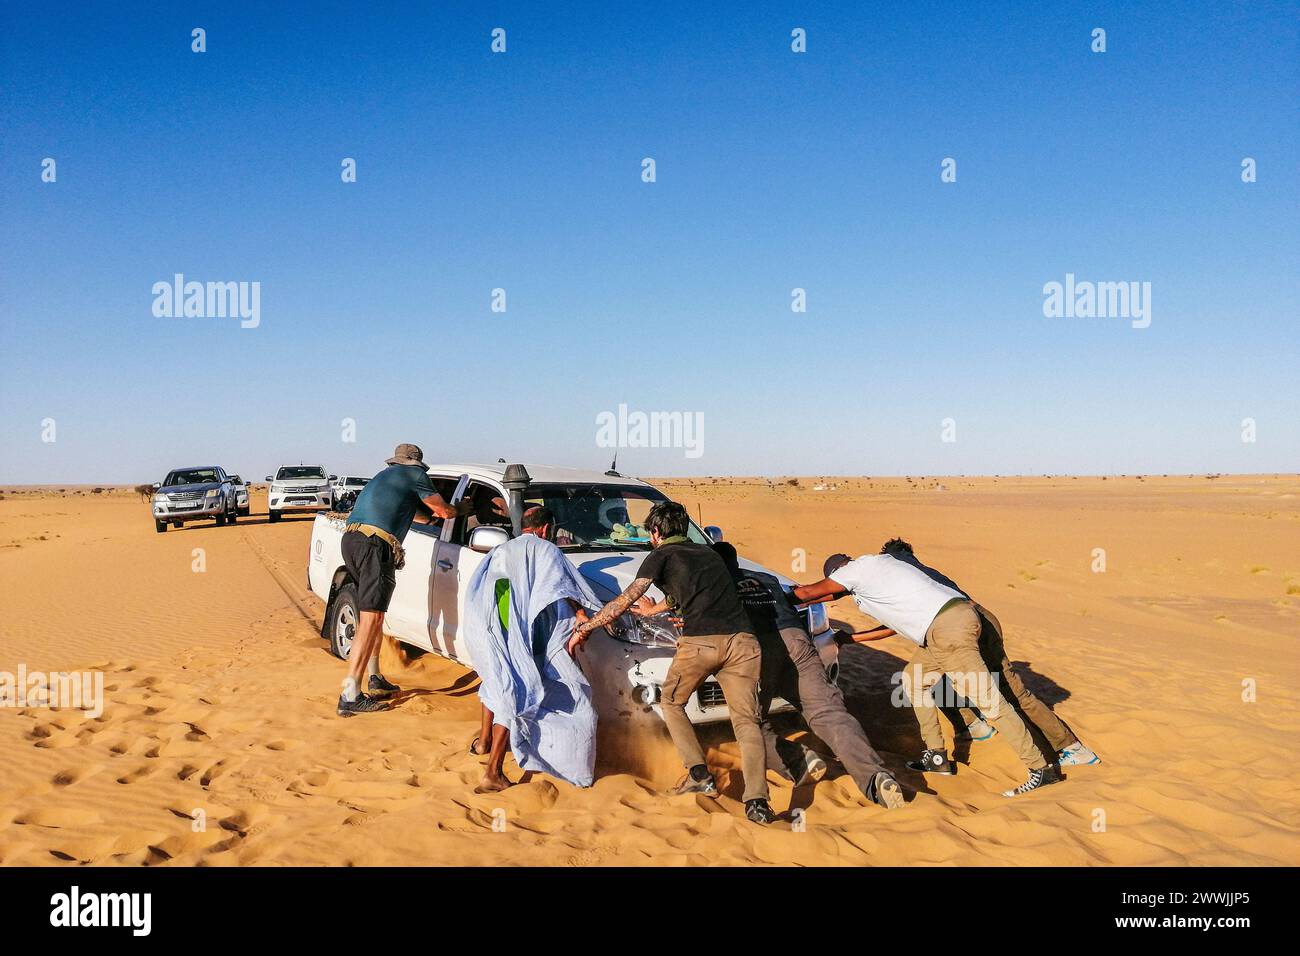 Mauritania, surroundings of Ben Amera, car stuck in the desert Stock Photo